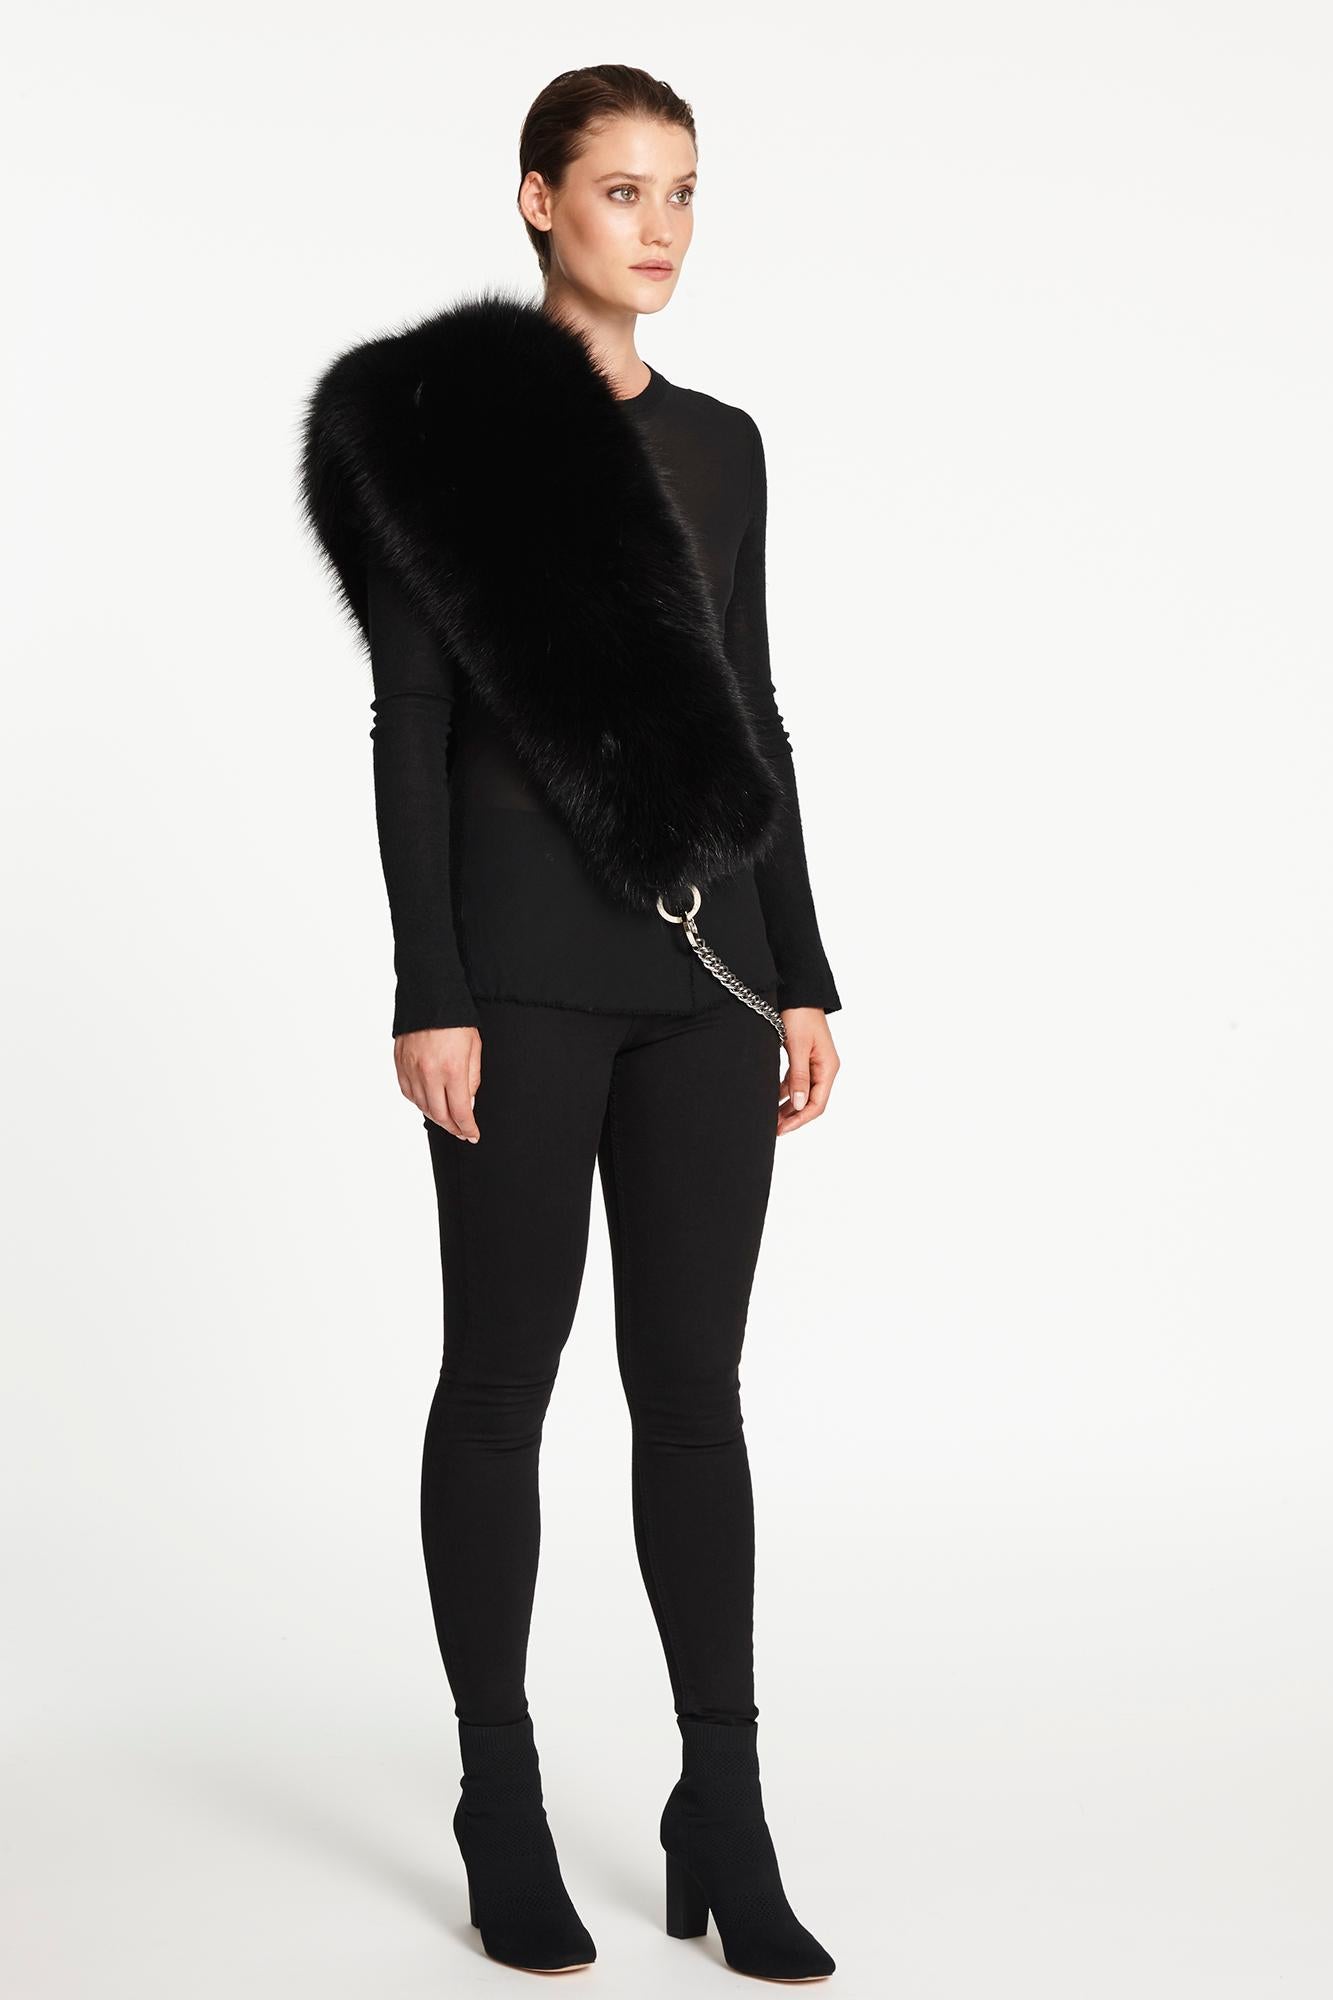 Verheyen London Chained Stole in Black Fox Fur & Chain - Brand New 7